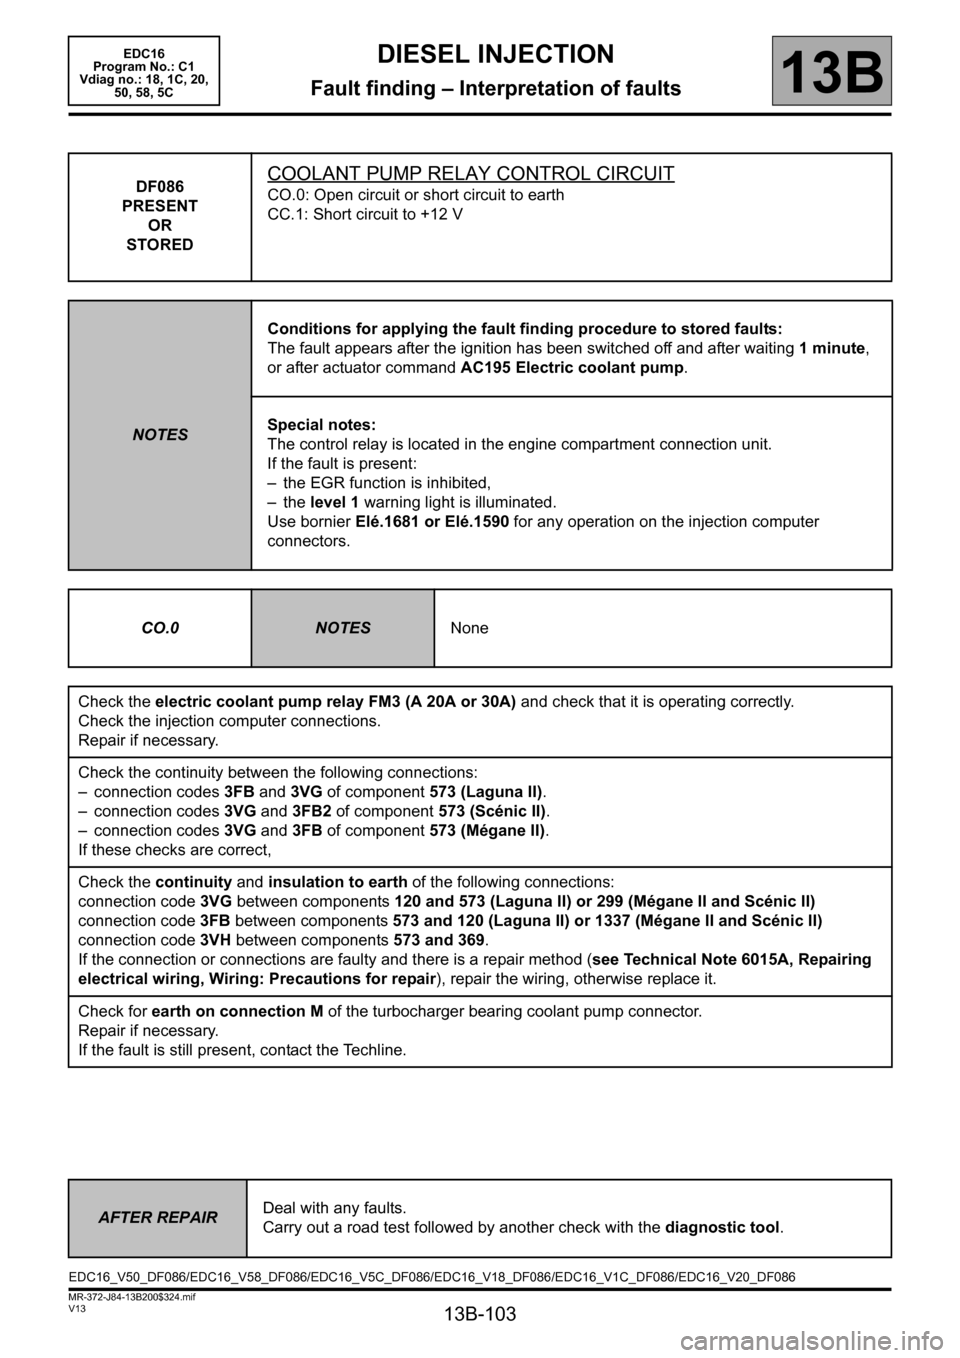 RENAULT SCENIC 2011 J95 / 3.G Engine And Peripherals EDC16 Service Manual 13B-103
MR-372-J84-13B200$324.mif
V13
DIESEL INJECTION
Fault finding – Interpretation of faults
EDC16  
Program No.: C1 
Vdiag no.: 18, 1C, 20,  
50, 58, 5C
13B
DF086
PRESENT
OR
STOREDCOOLANT PUMP R